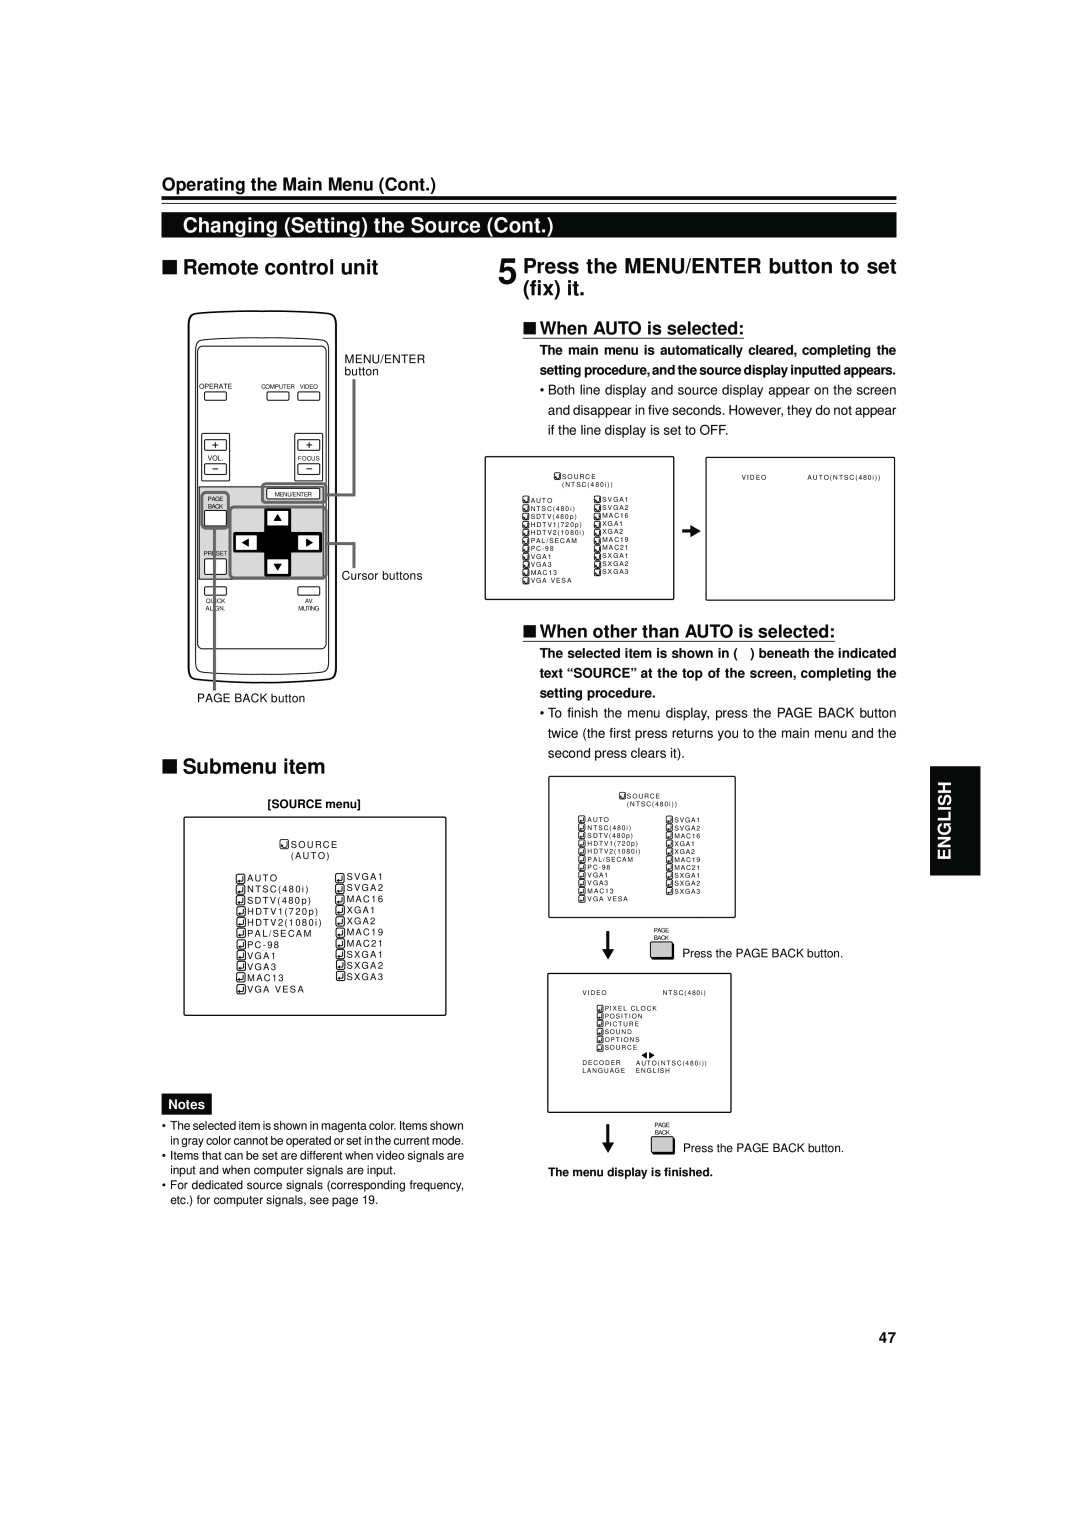 JVC DLA-S15U manual Changing Setting the Source Cont, Press the MENU/ENTER button to set fix it, Submenu item, English 